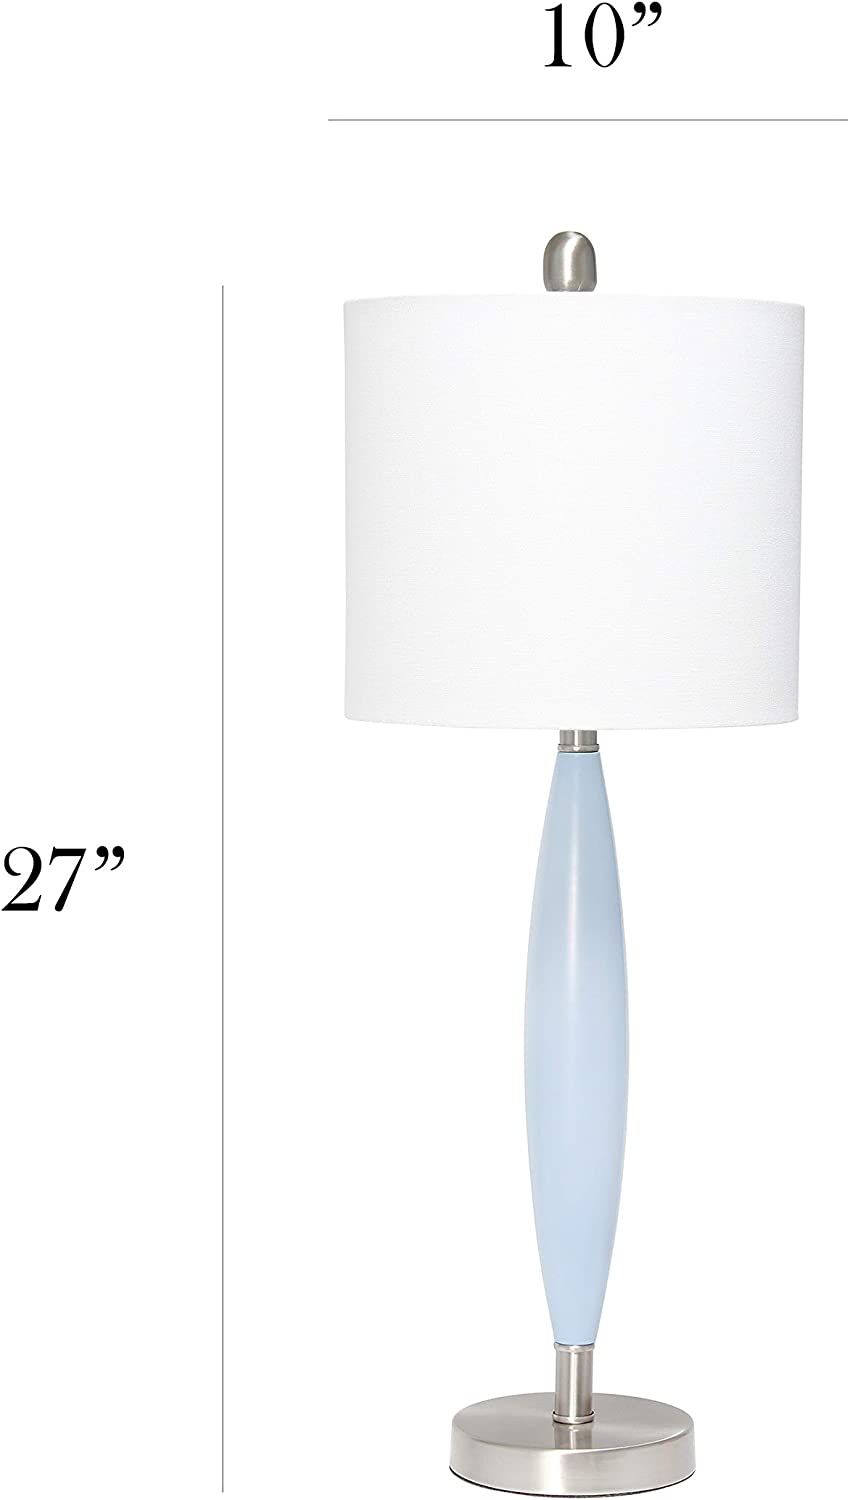 Elegant Designs LT3308-GRY Needle Stick Table Lamp, Gray